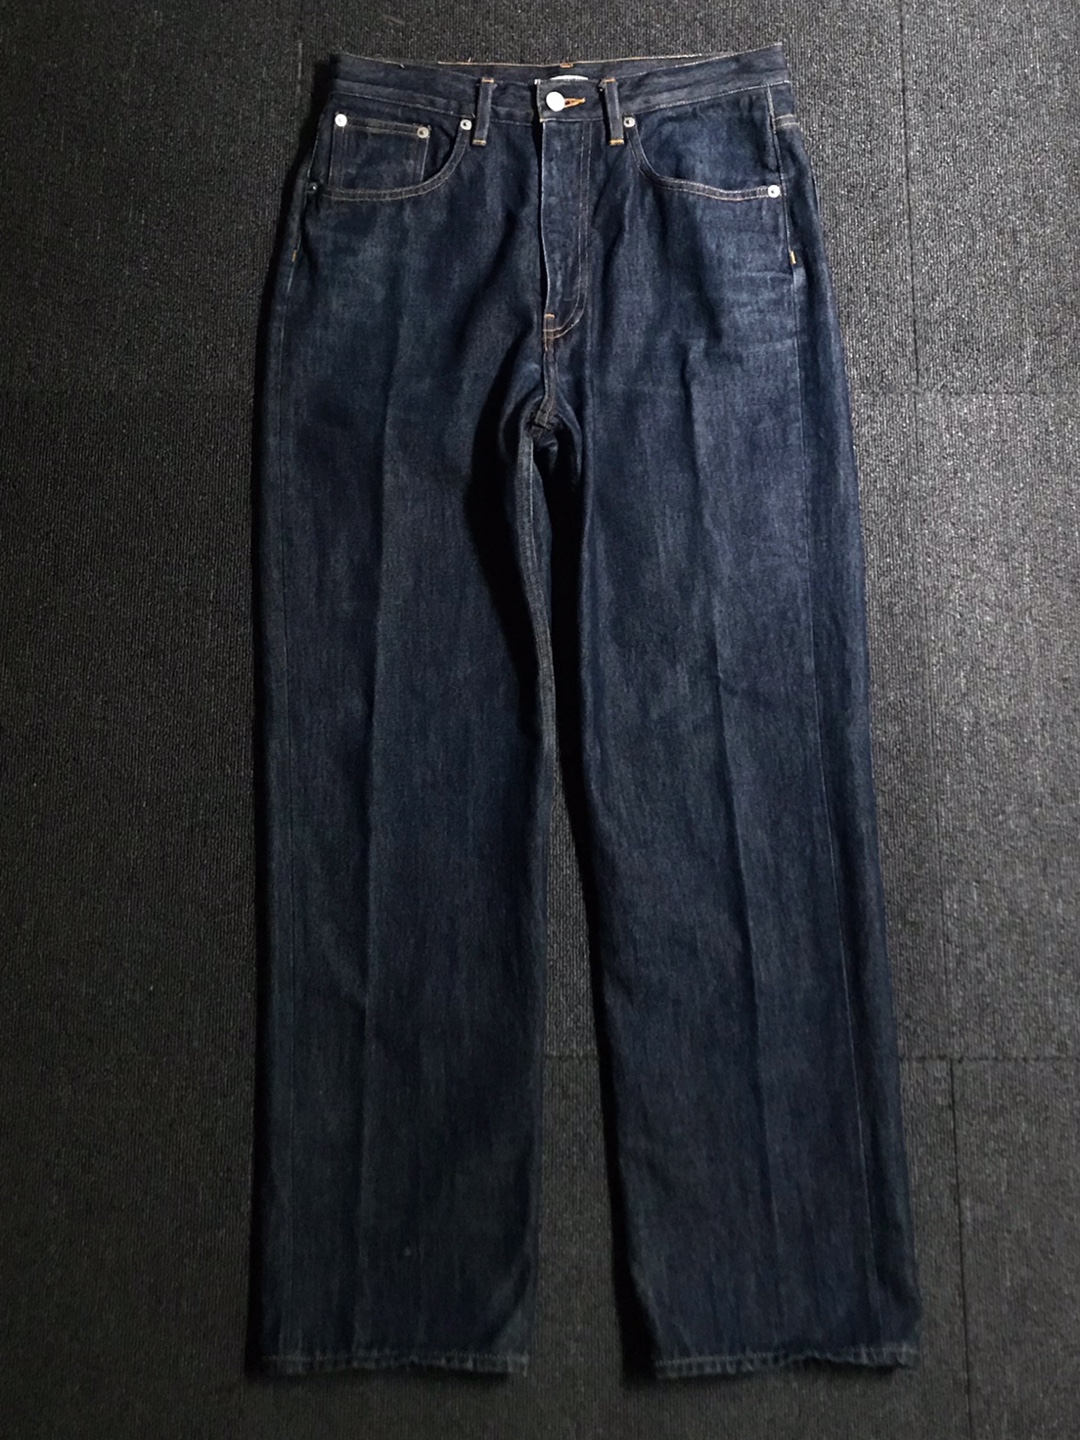 auralee 5p jeans (30 size, ~30인치 추천)